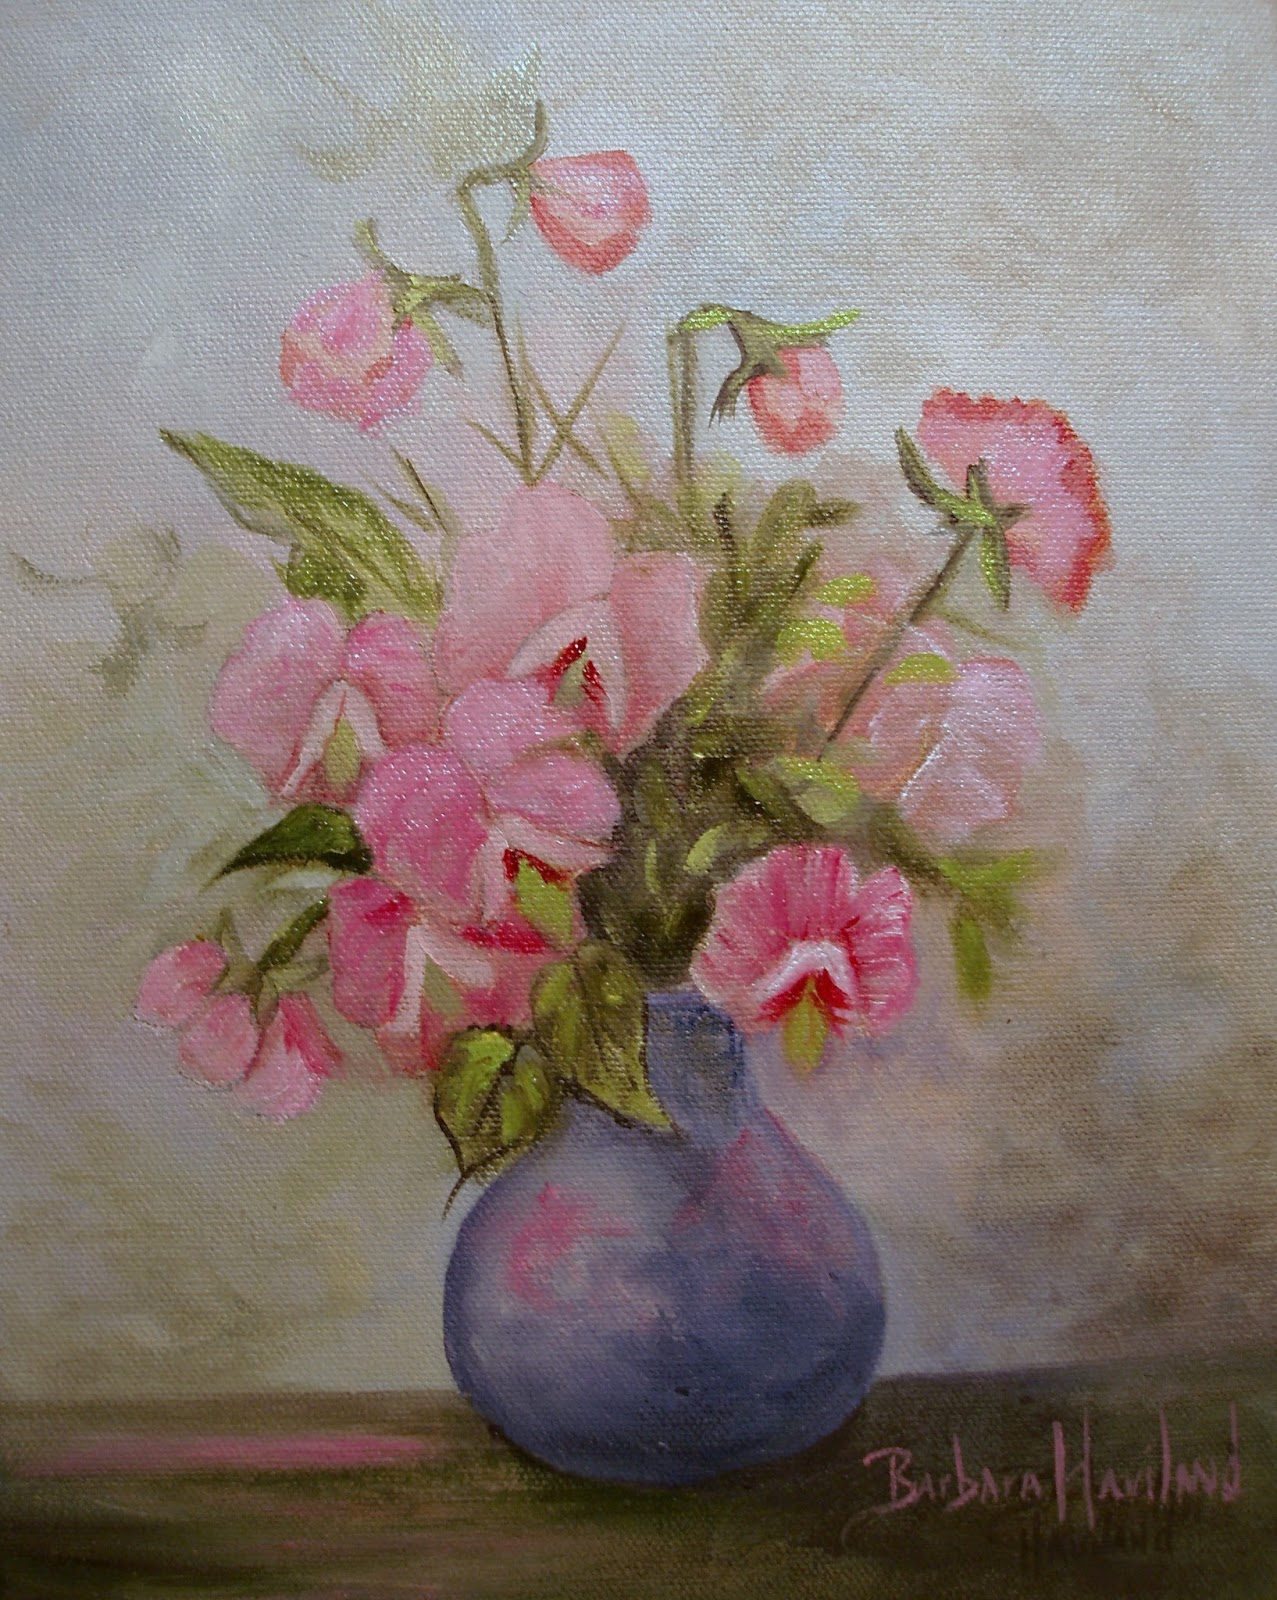 Sweet Peas,flowers,Barbara Haviland